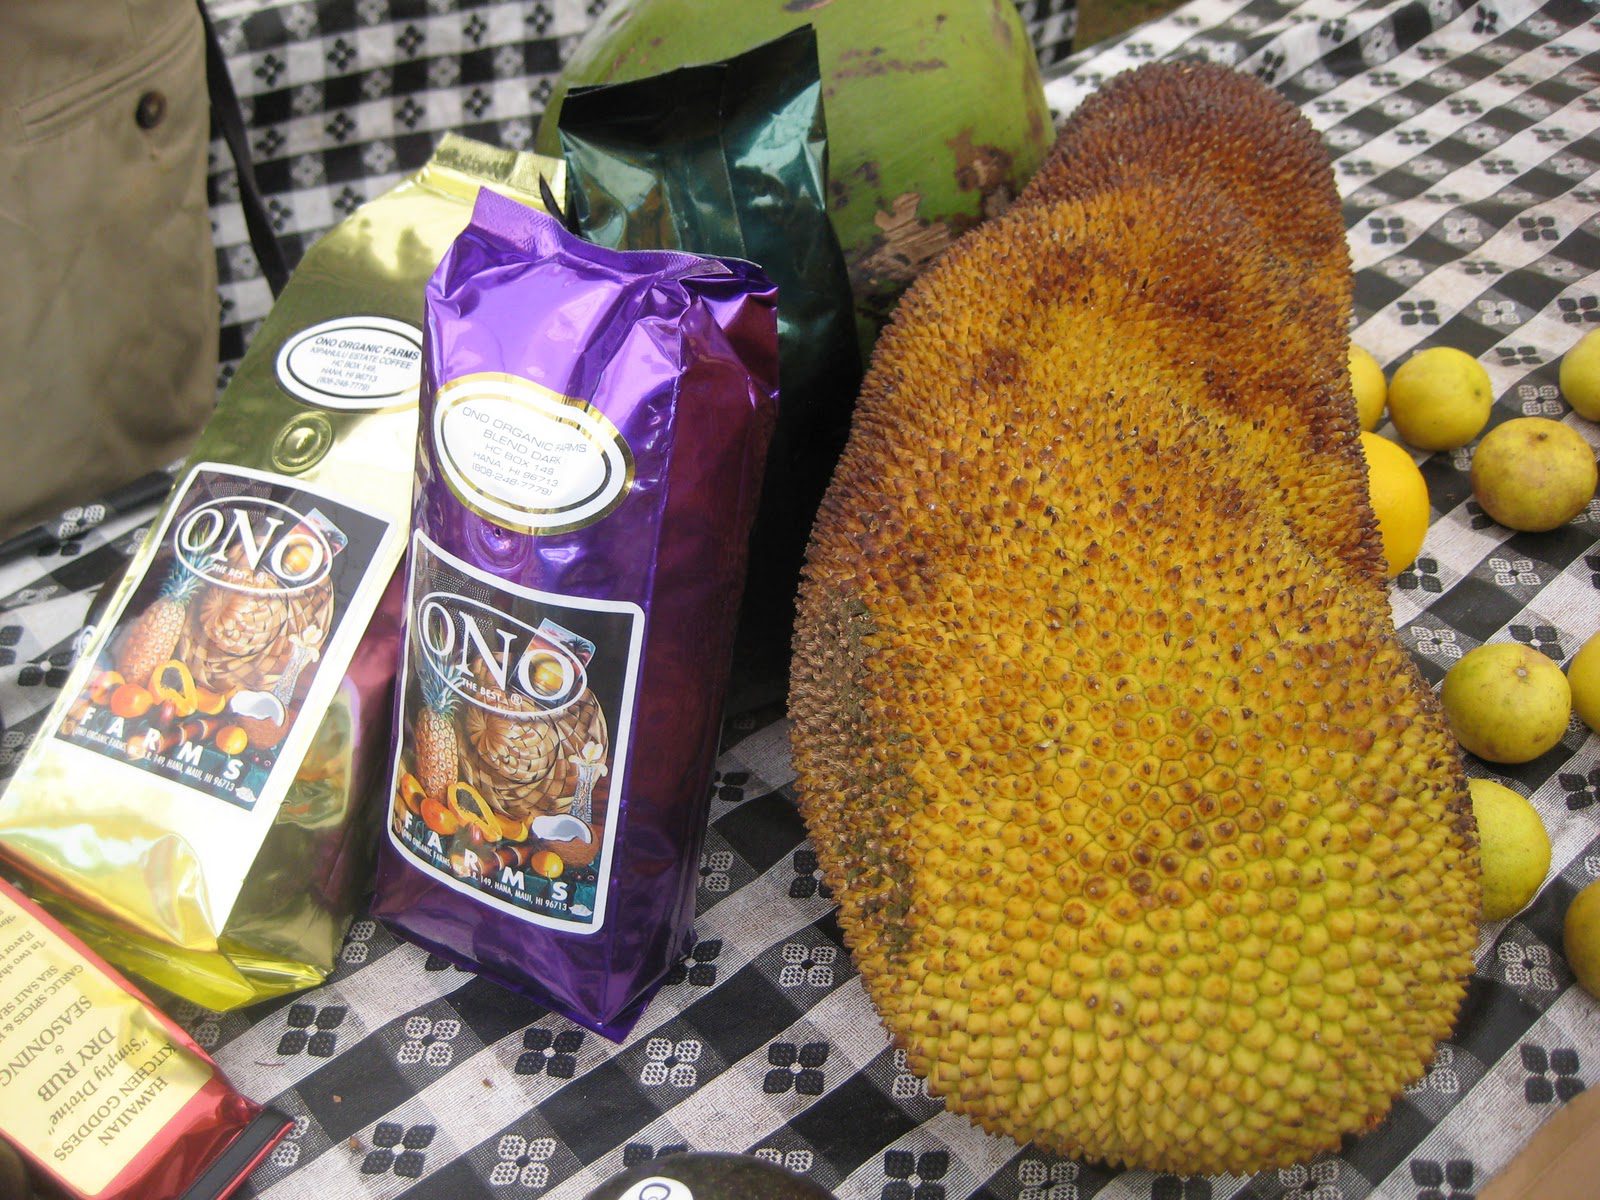 Maui Organic Farms - Jackfruit and coffee on the table for sale